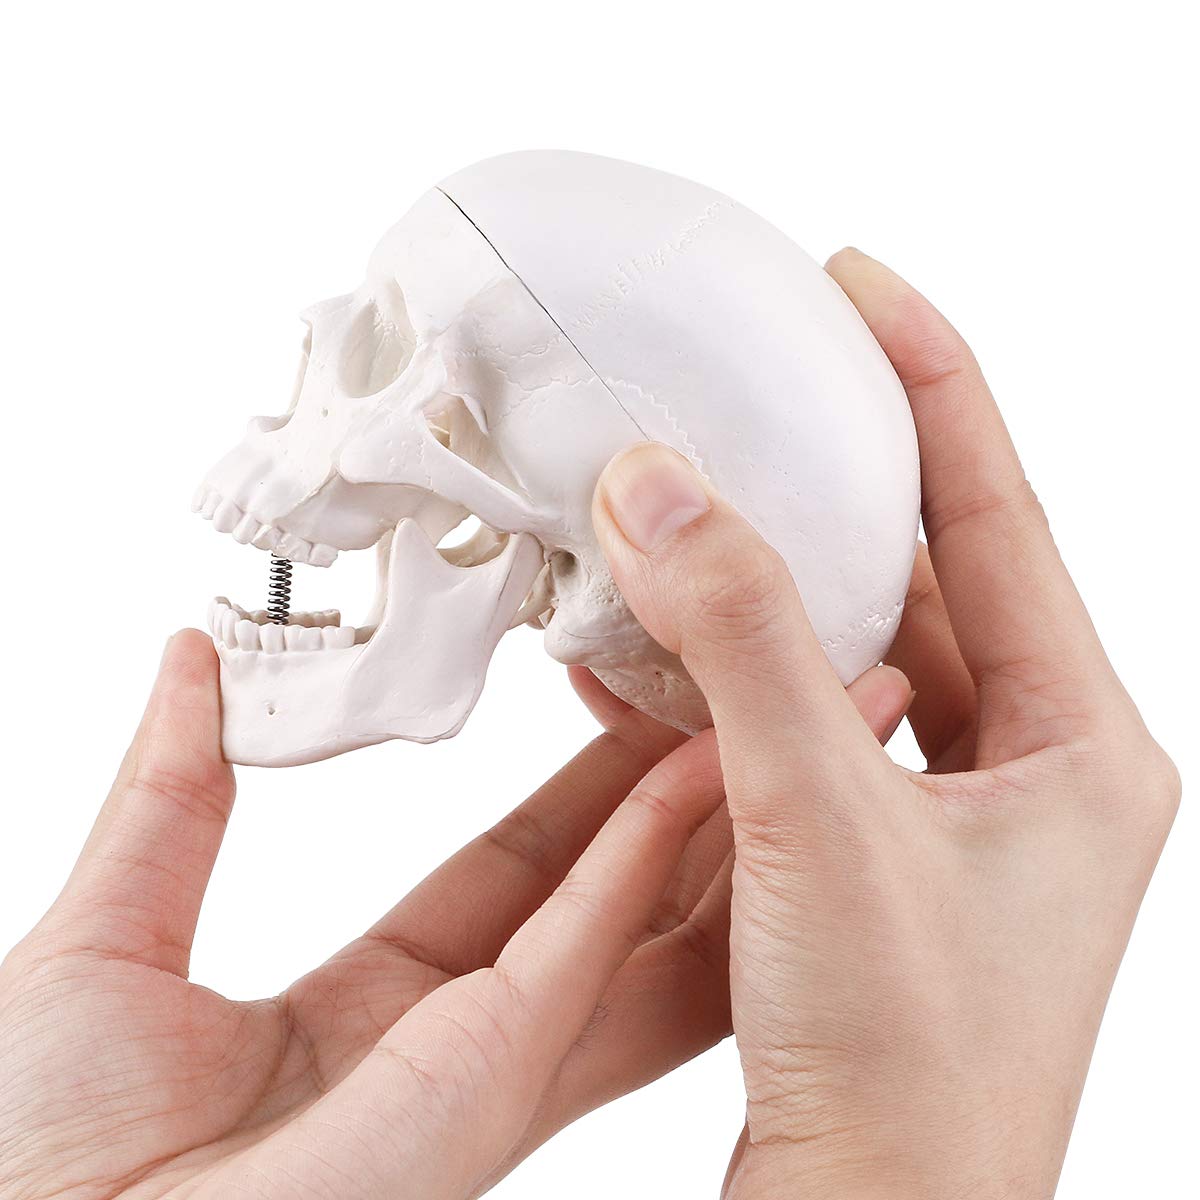 Mini Skull Model Small Size Human Medical Anatomical Head Bone